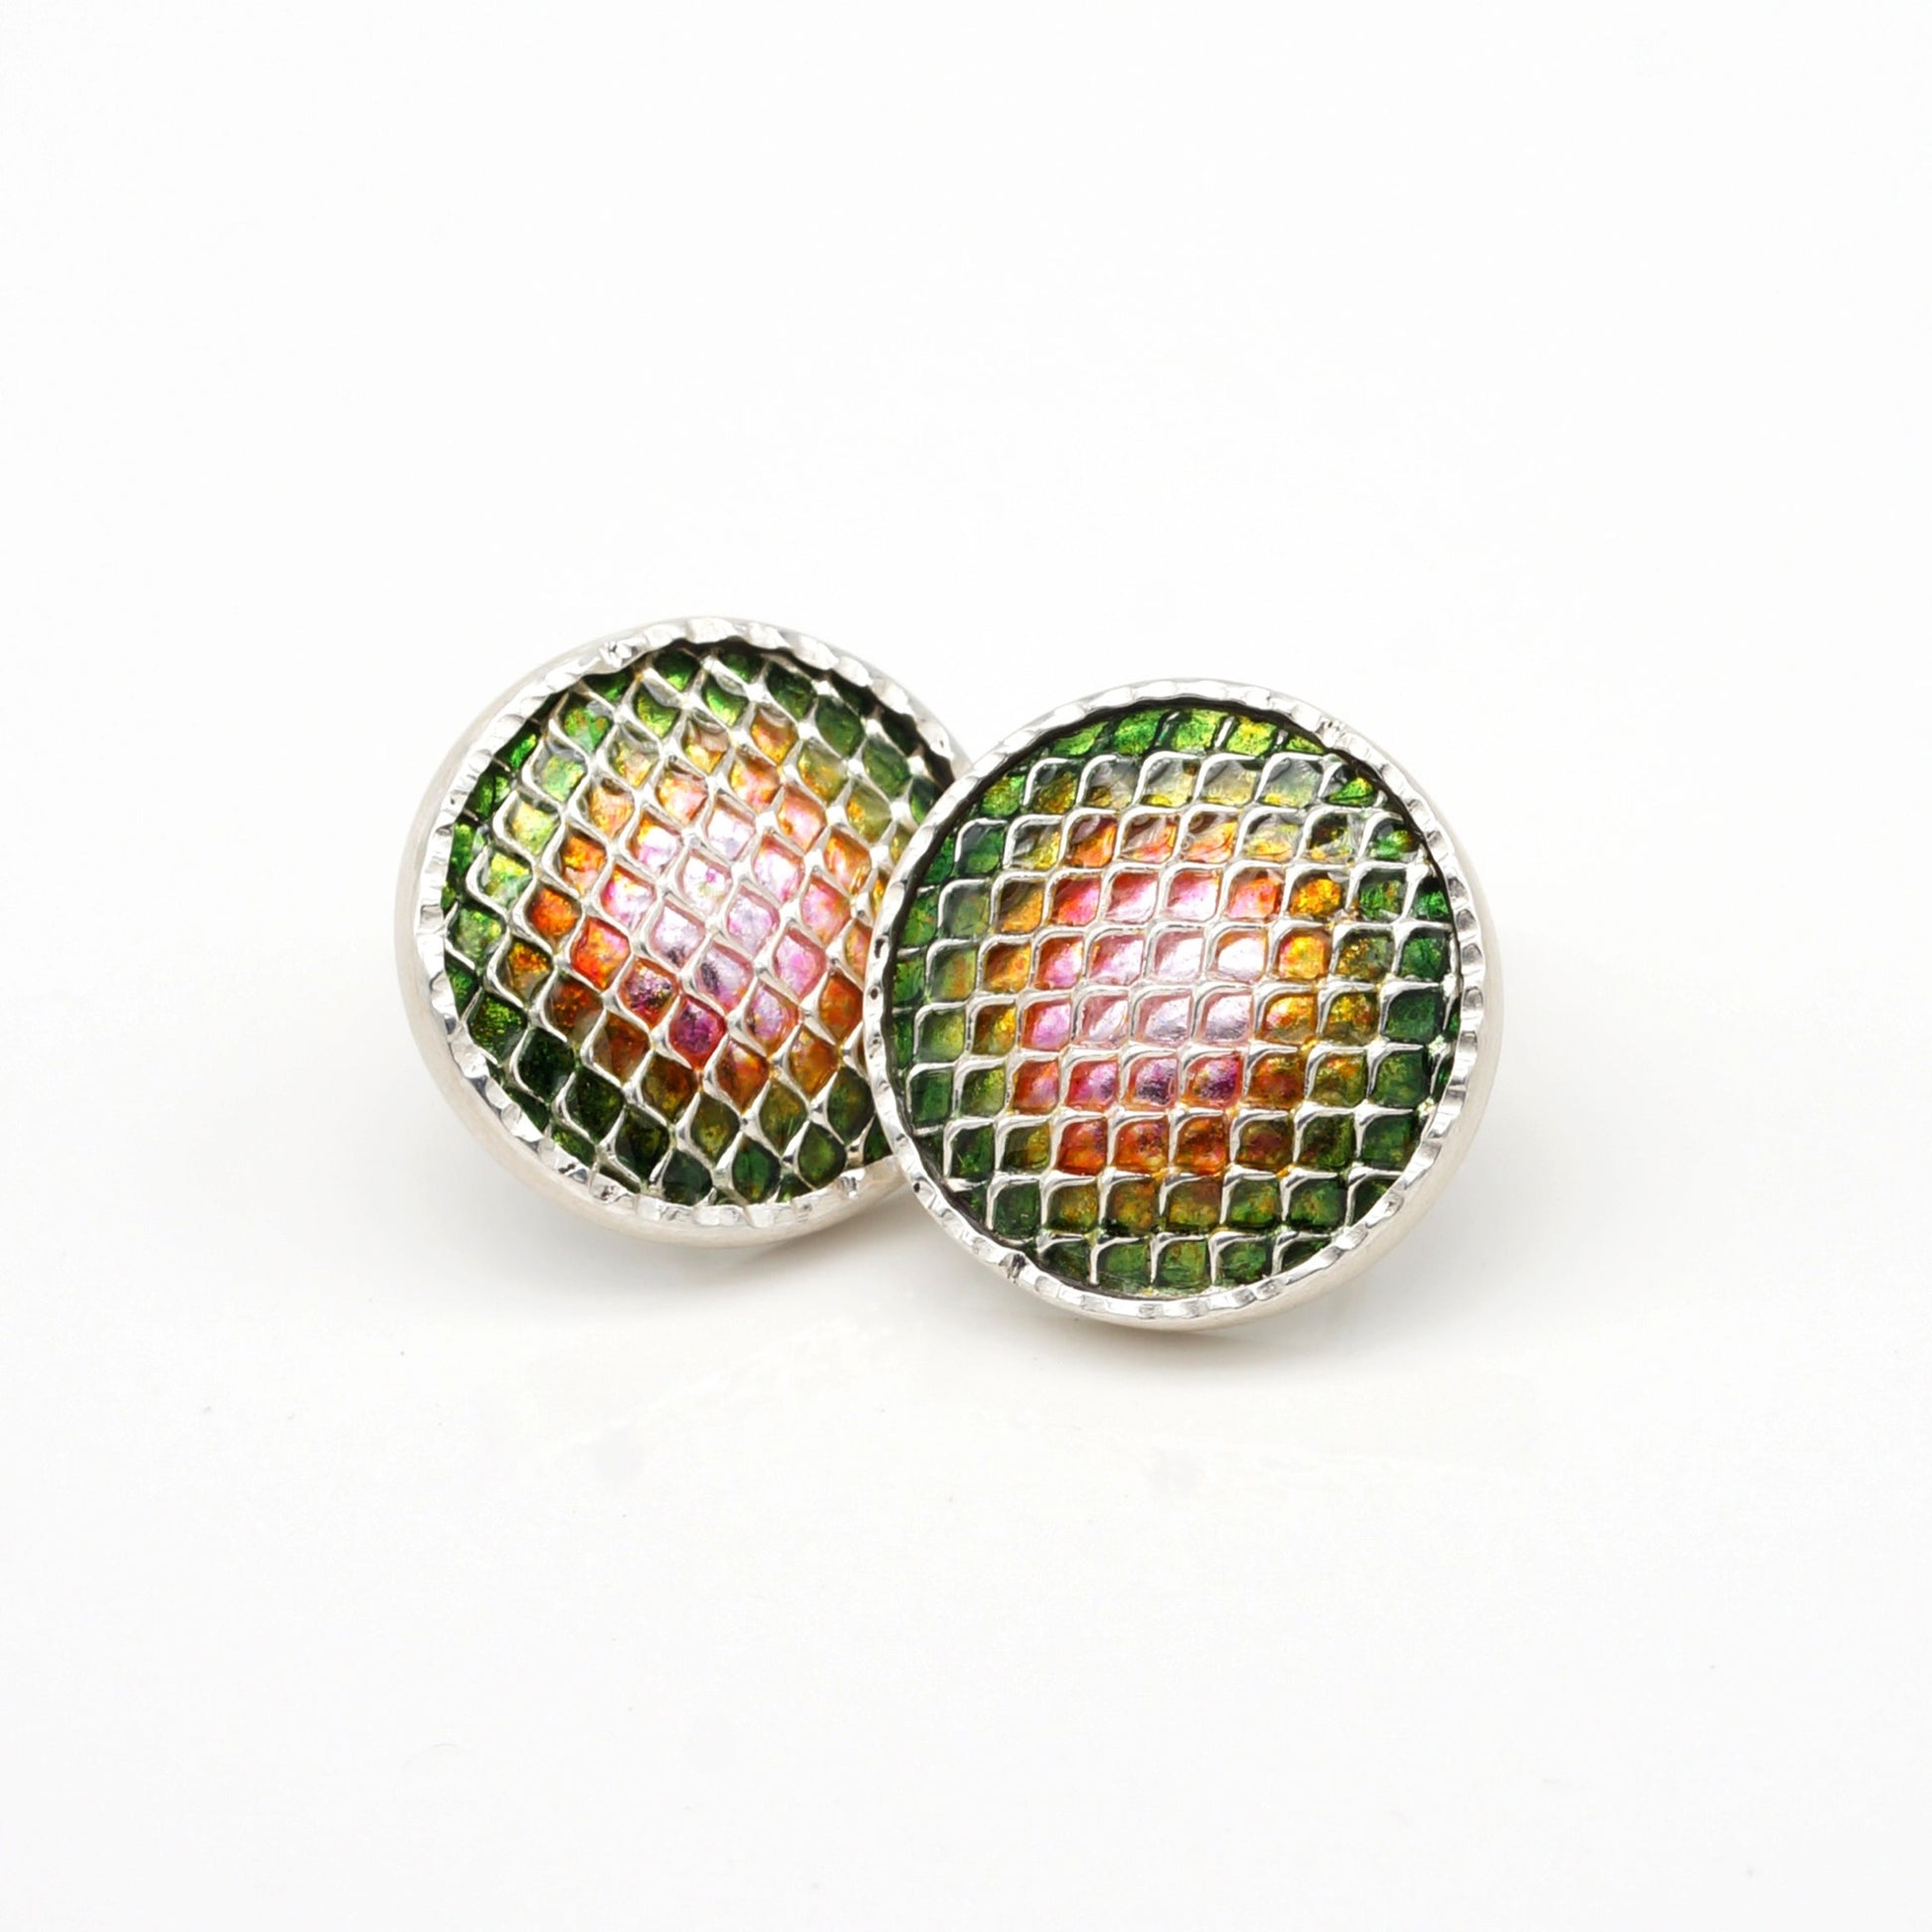 kiln fired enamel earrings in pink to green watermelon colors and silver gridwork in sterling silver bezels